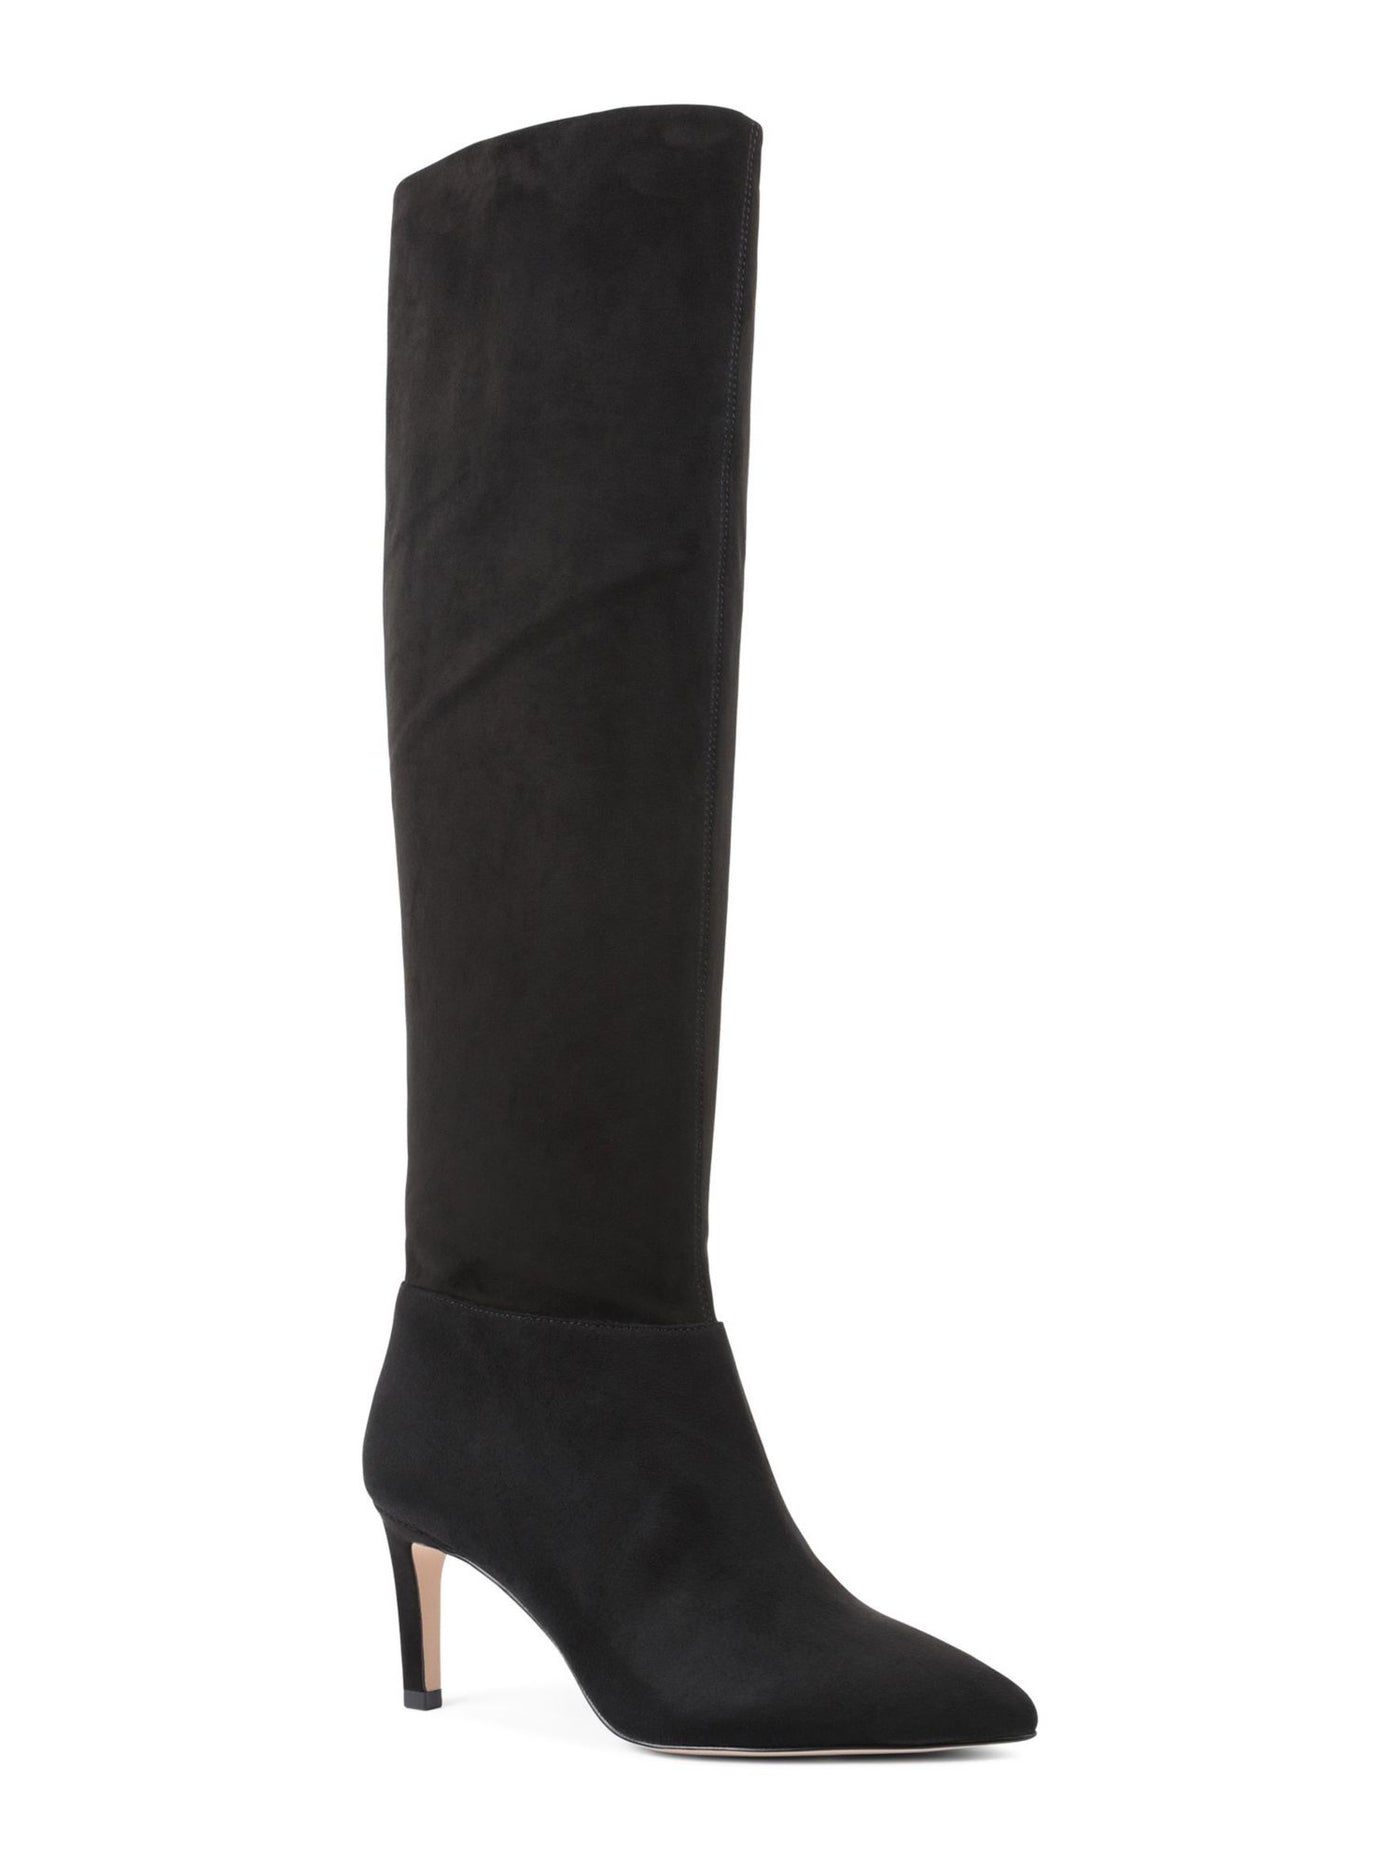 BCBG MAXAZRIA Womens Black Stretch Pointed Toe Stiletto Dress Boots 9.5